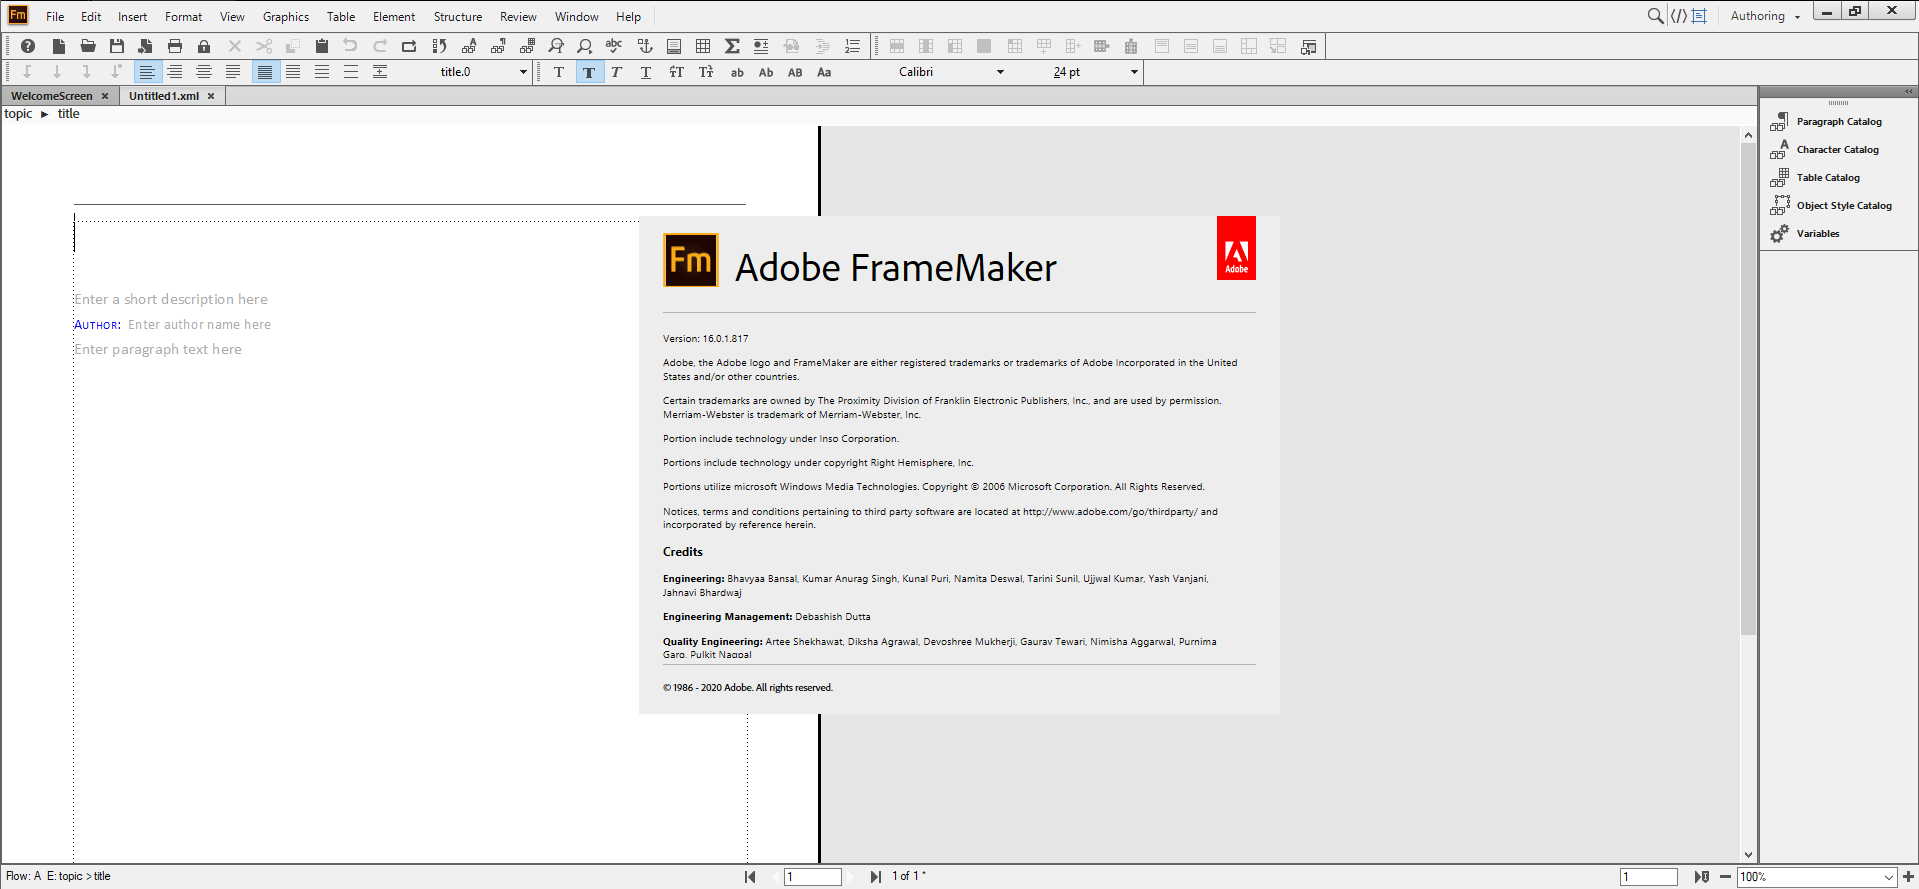 Adobe FrameMaker 2020 16.0.1.817 (x64) Multilanguage